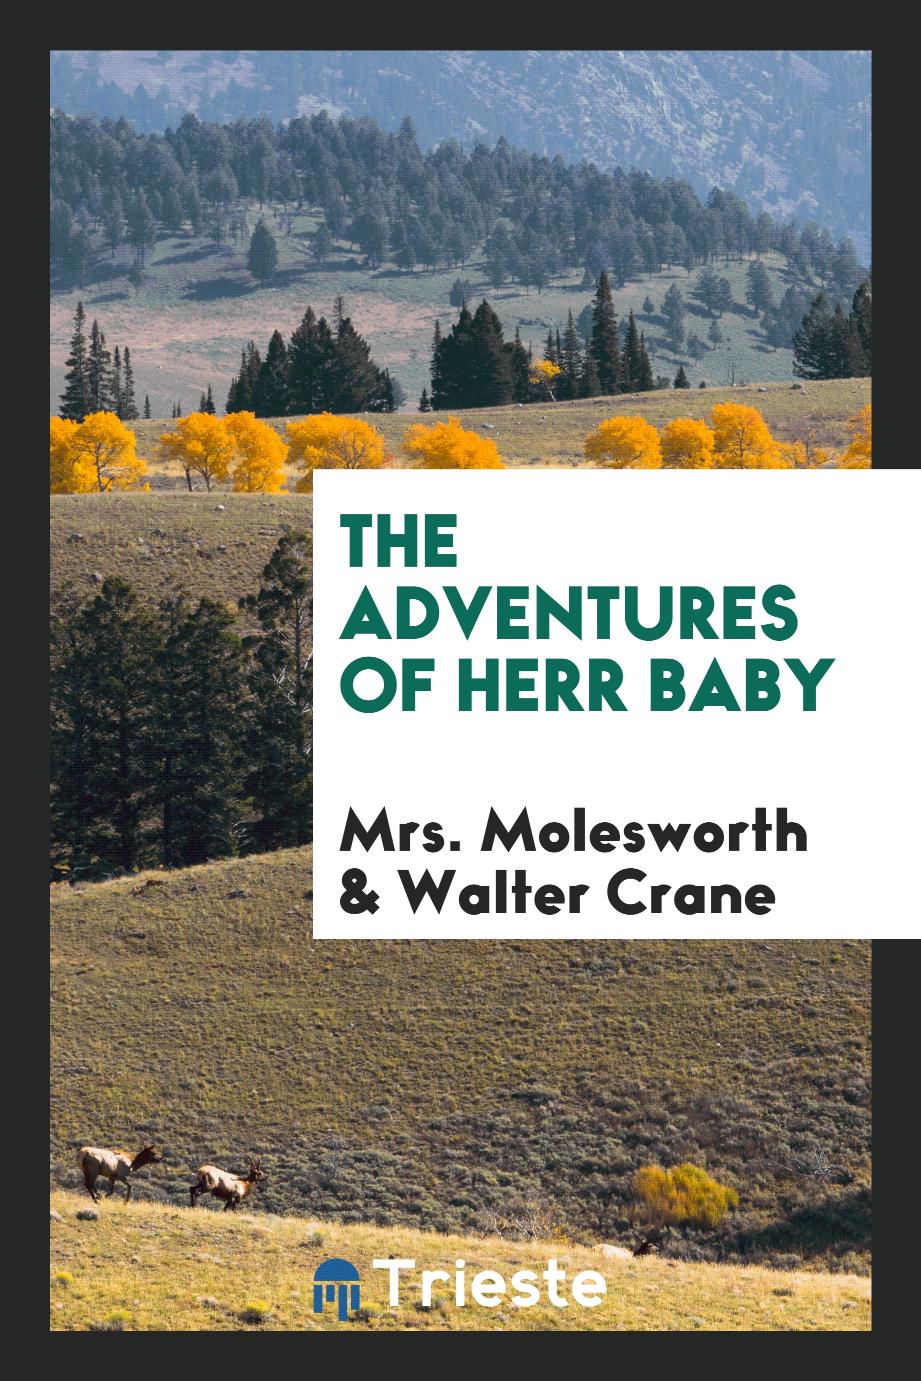 The adventures of Herr Baby